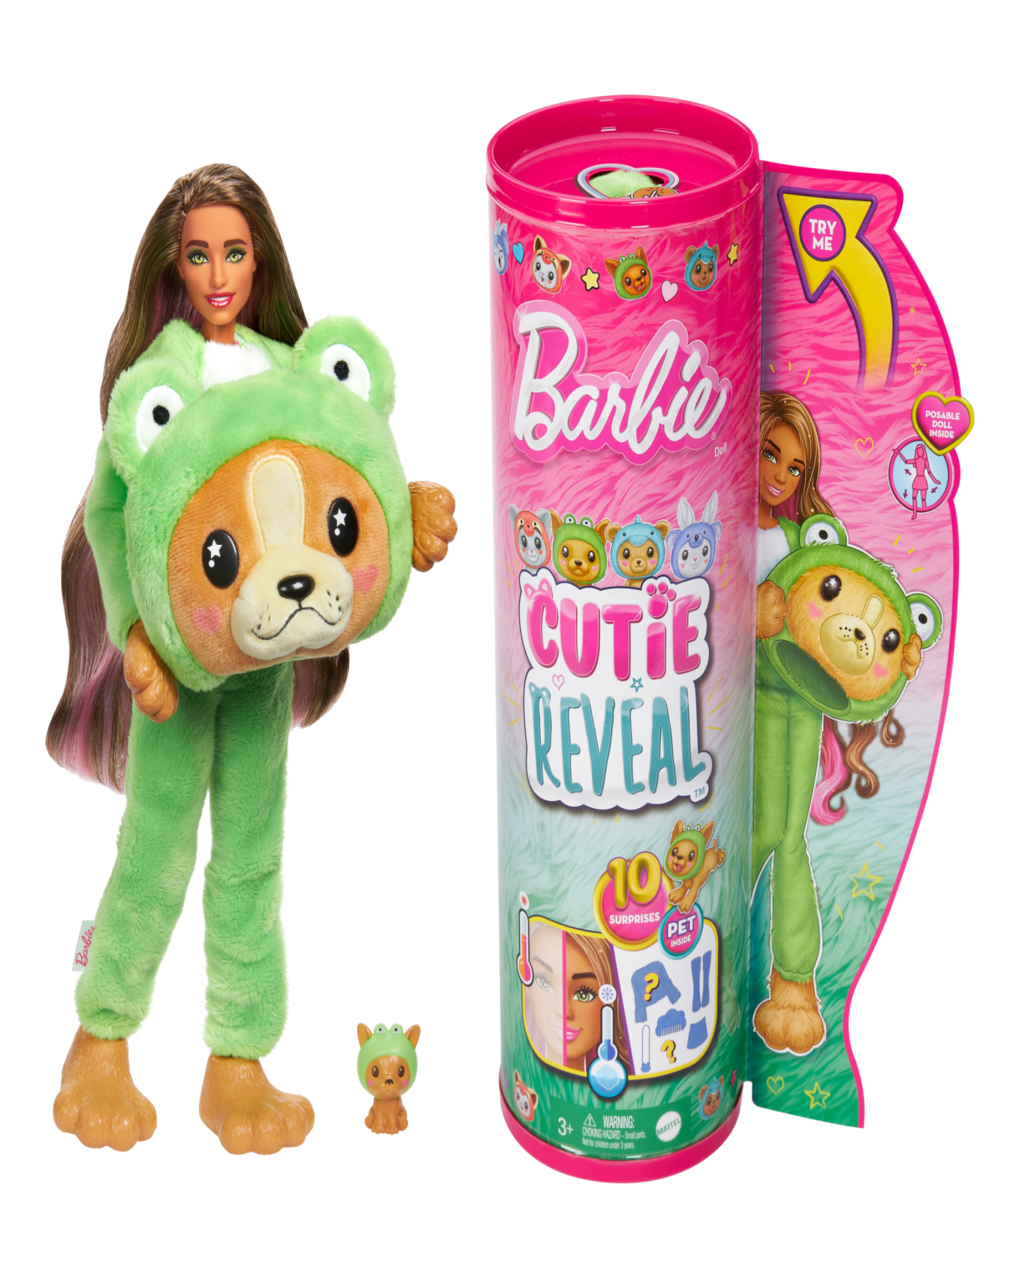 Barbie λαμπάδα cutie reveal κούκλα και αξεσουάρ με 10 εκπλήξεις hrk24 - BARBIE